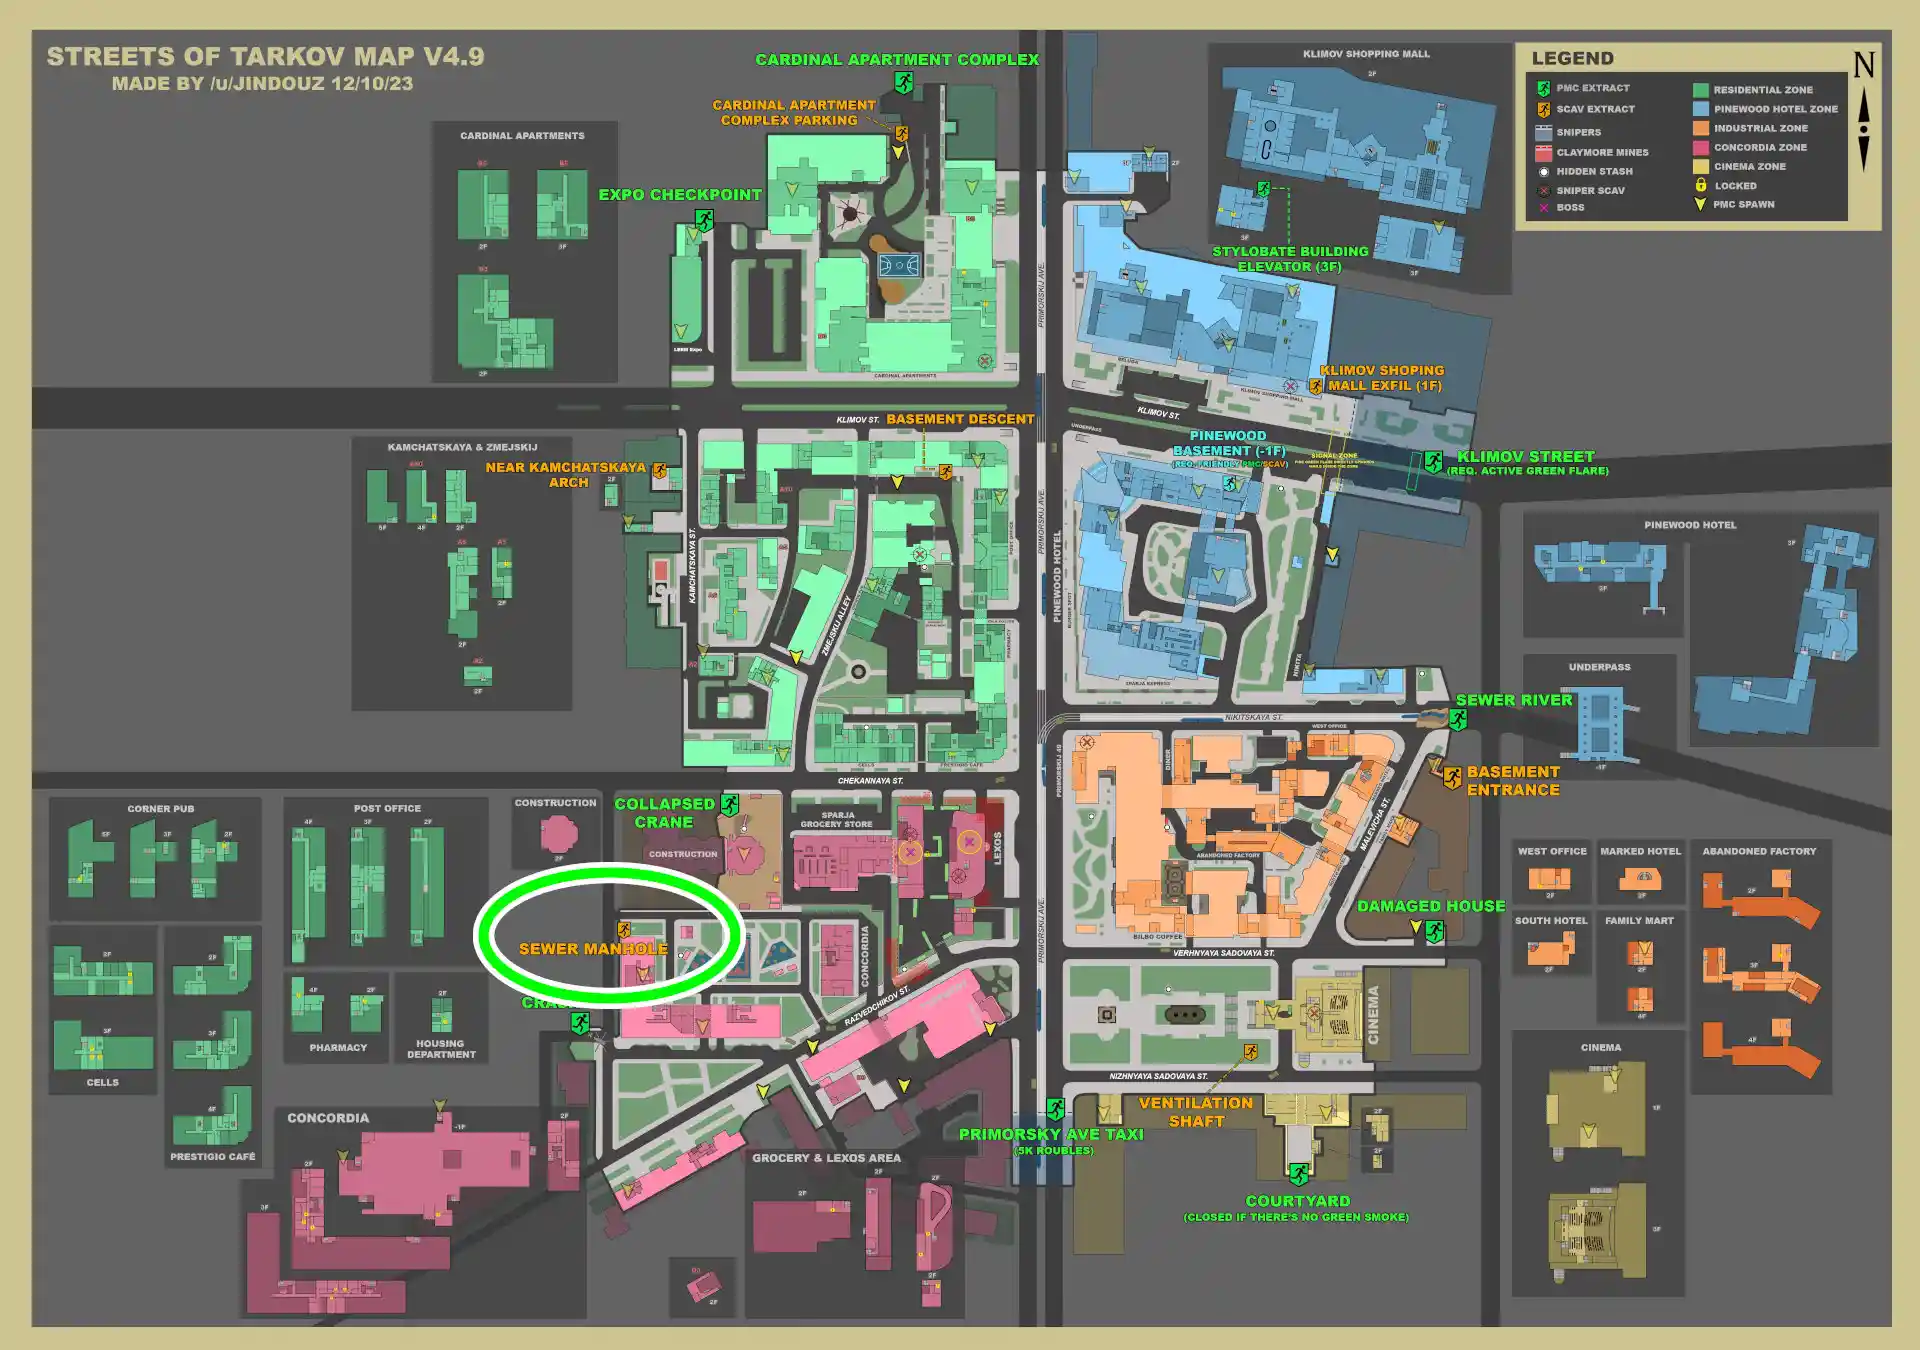 STREETS_OF_TARKOV-ESC-Sewer_Manhole-MAP.jpg